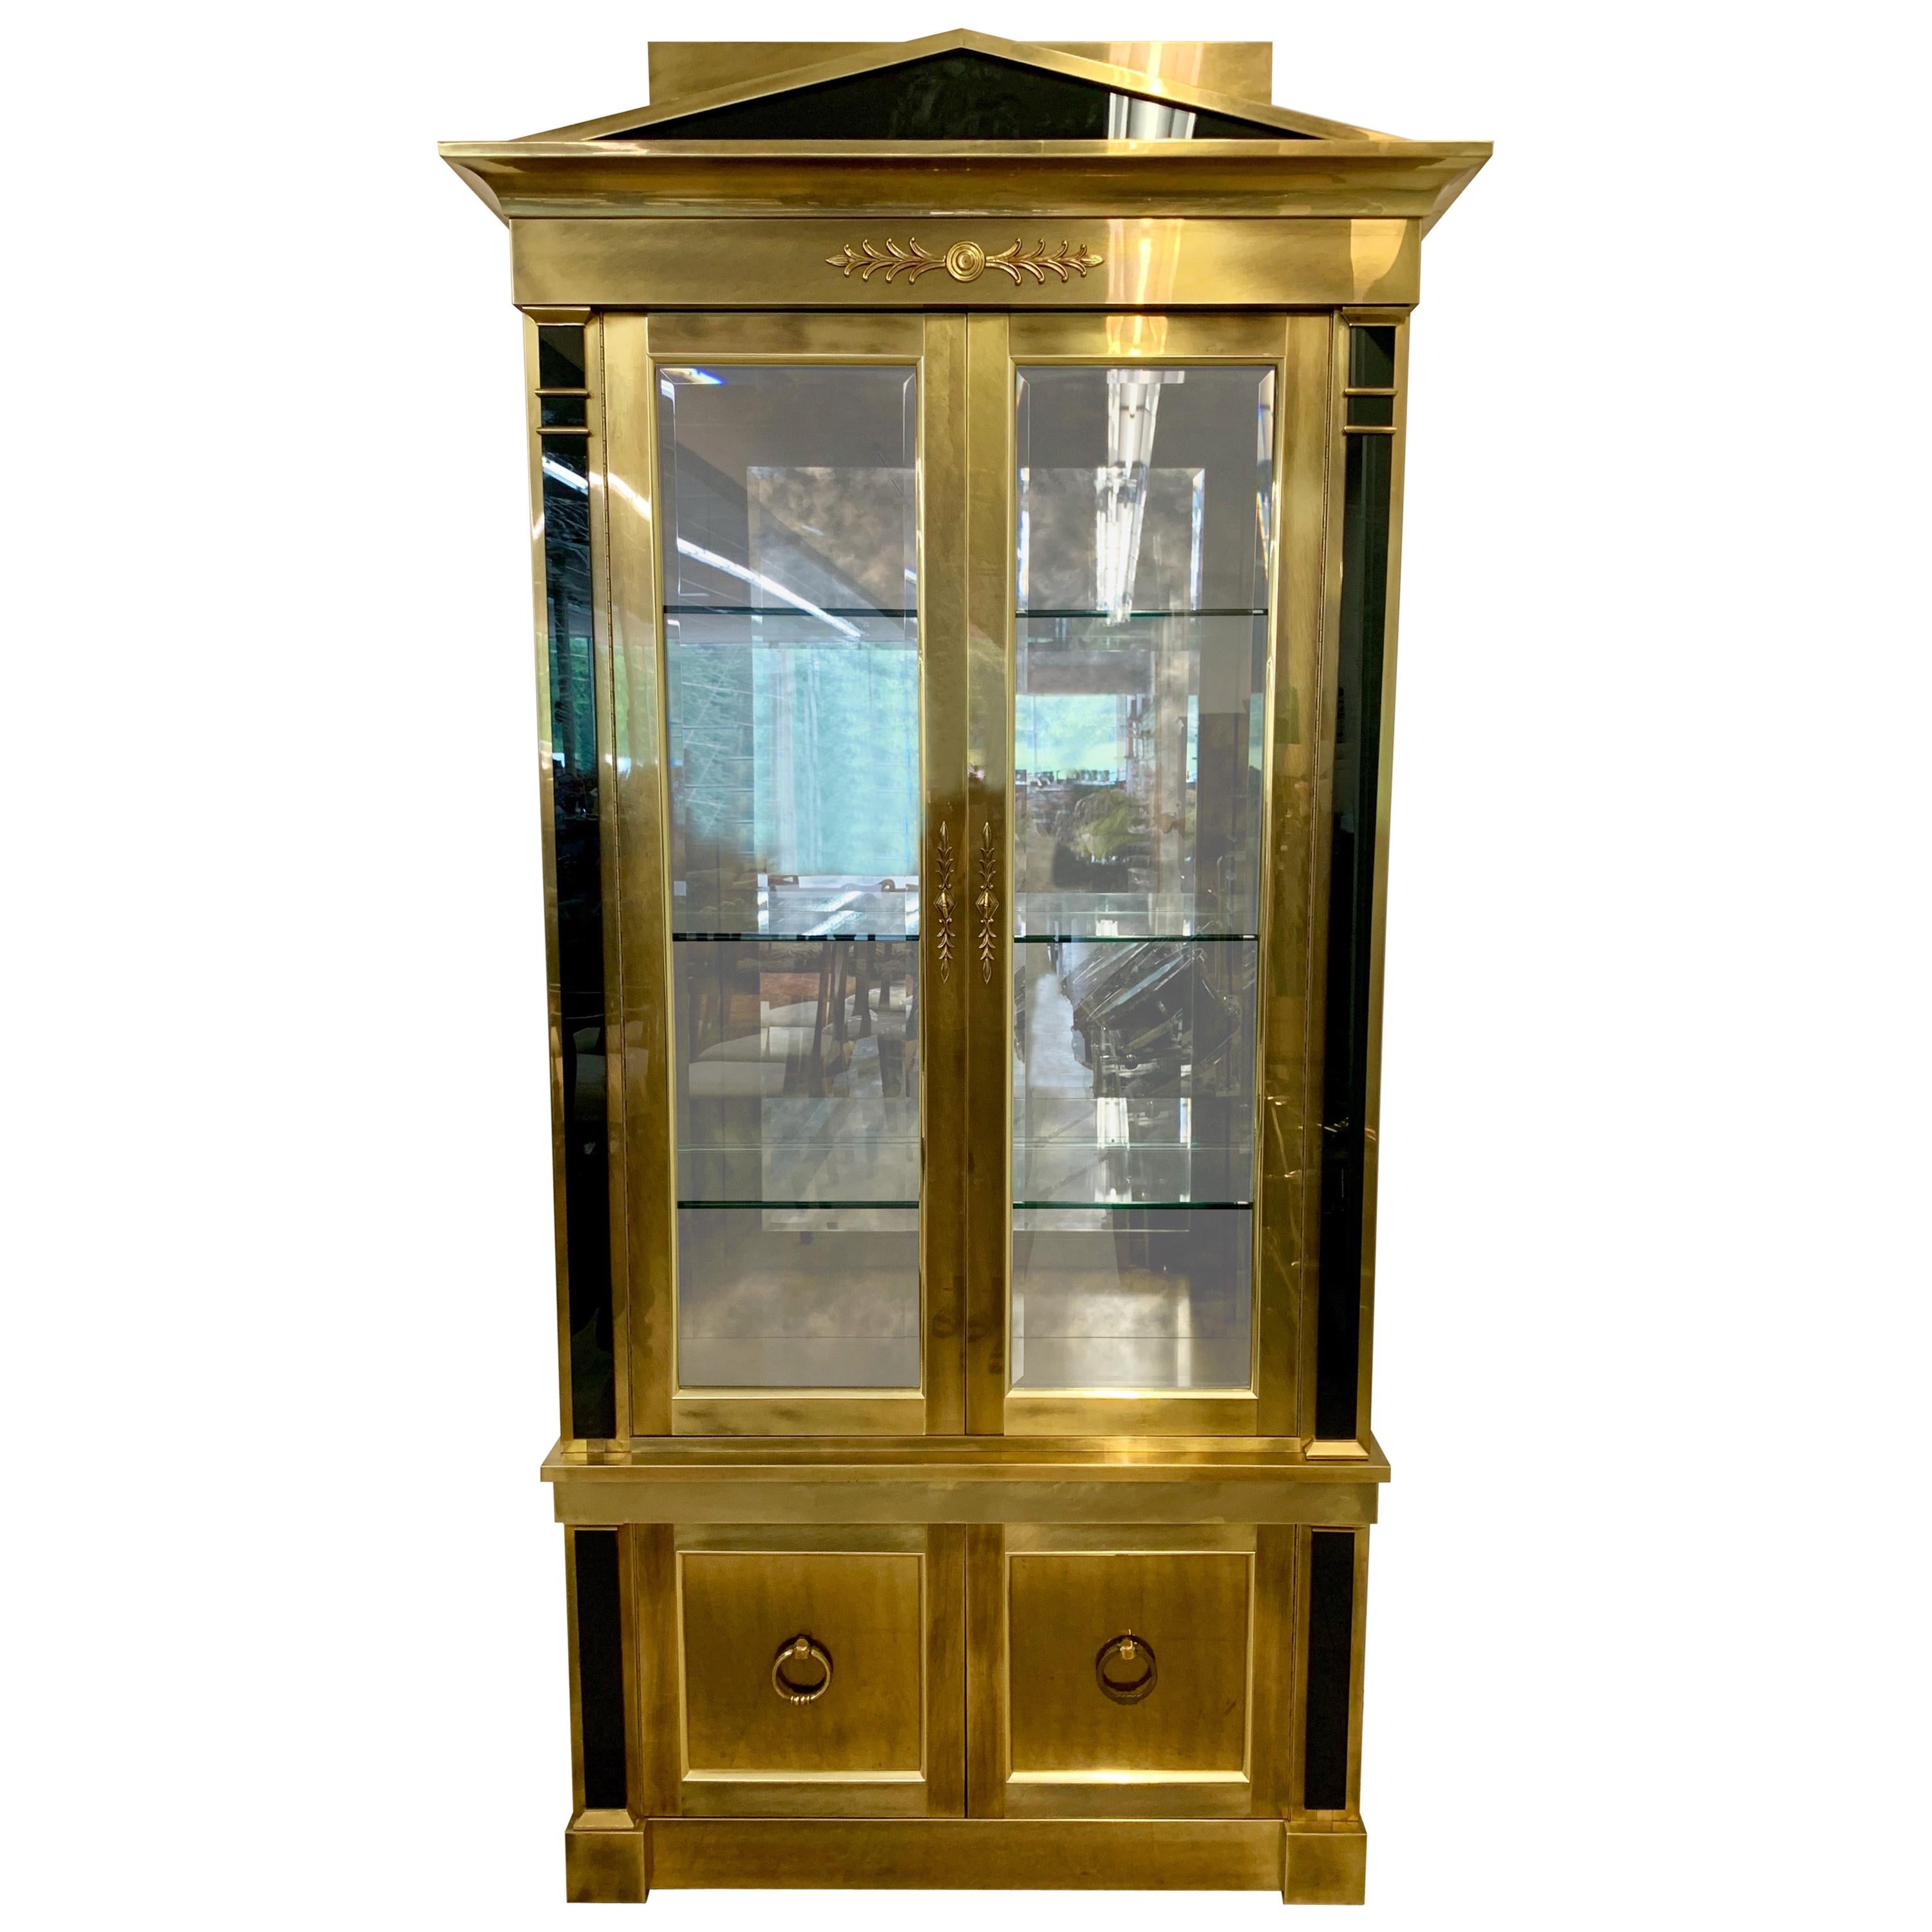 Mastercraft Lighted Brass Display Cabinet Vitrine Iconic Mid-Century Modern